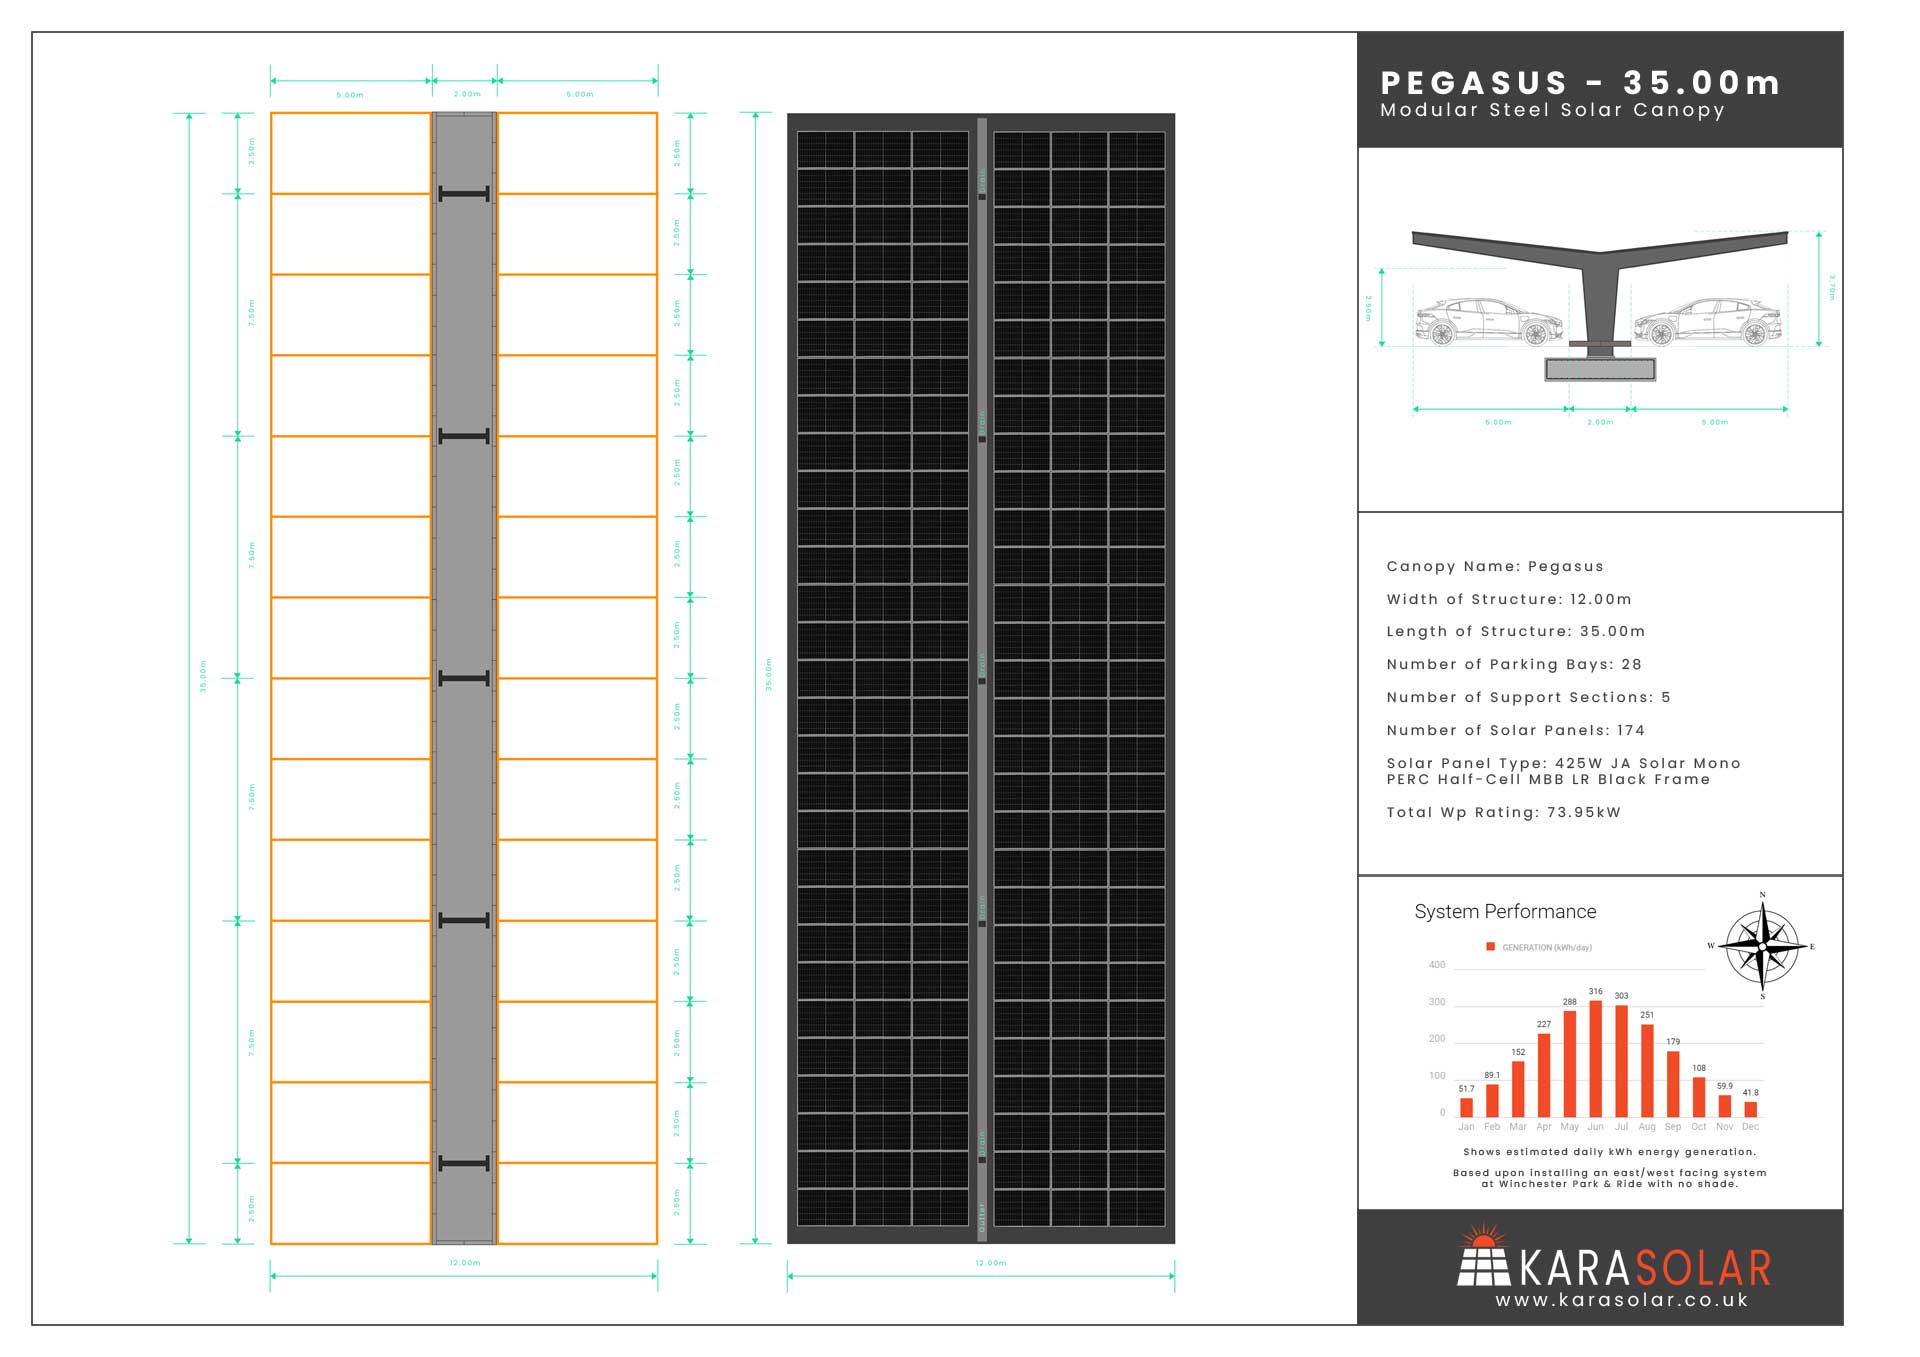 Pegasus-Steel-Solar-Canopy-Parking-Layout-35.00m-Doc